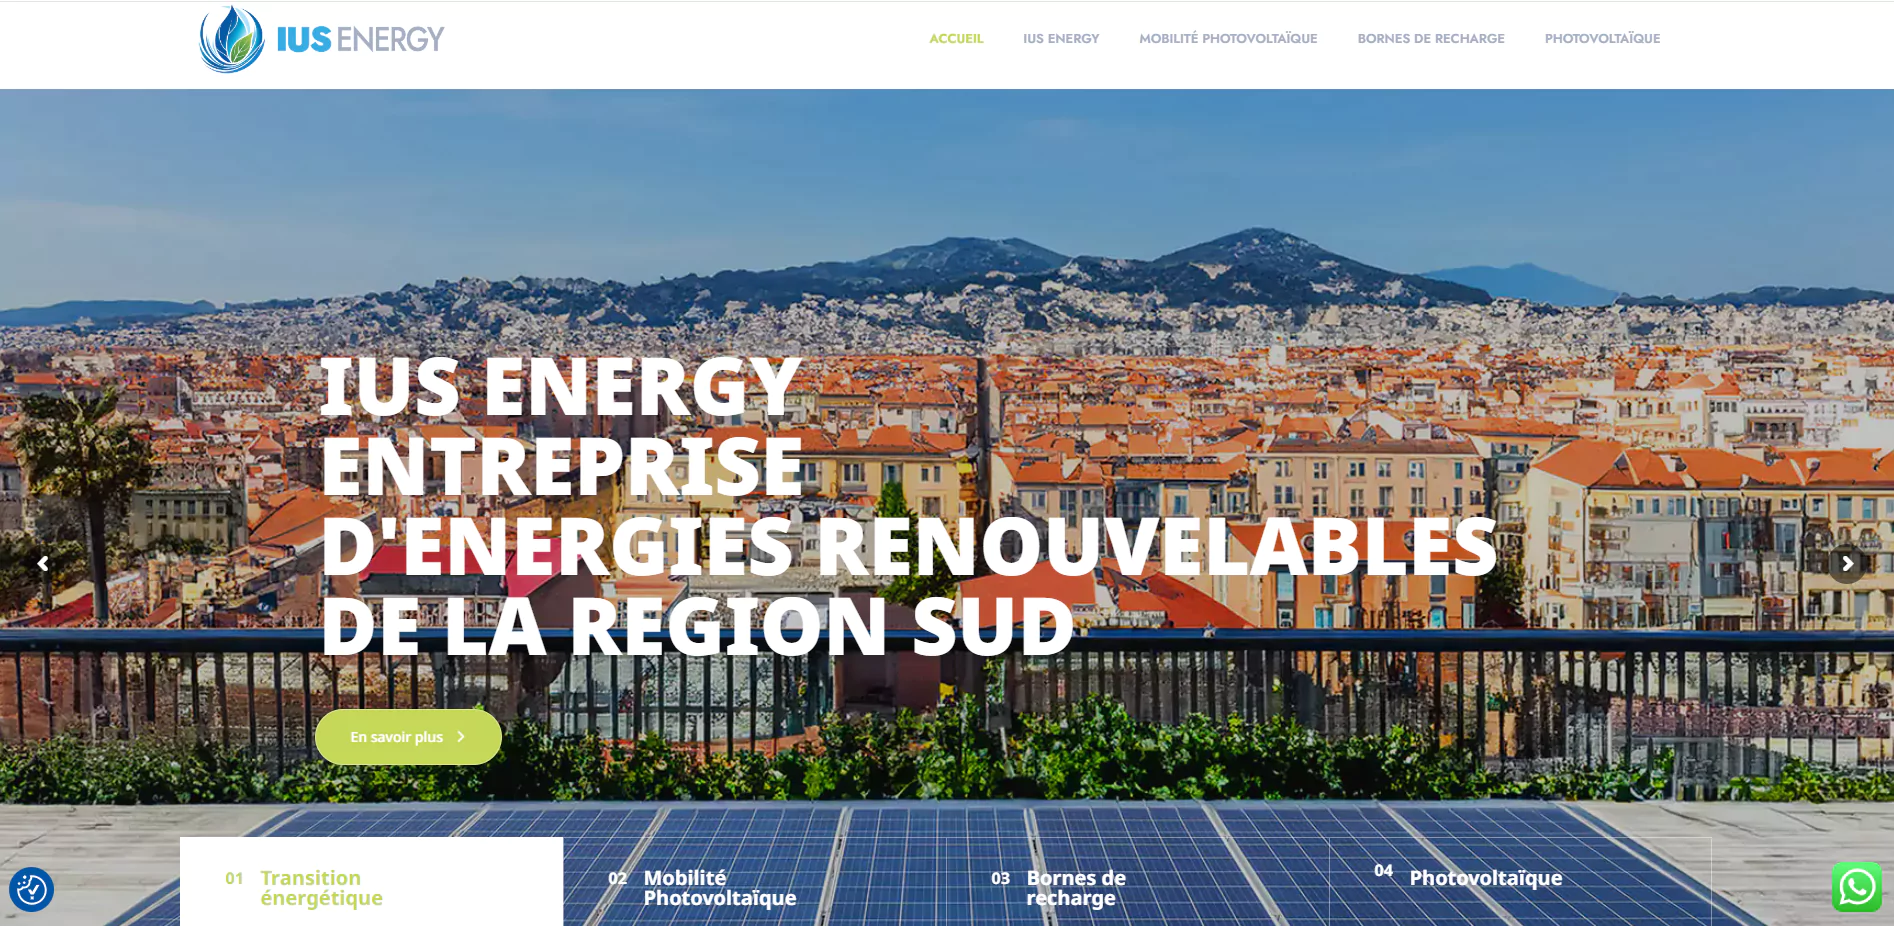 ius-energy-sustainable-renewable-energy-consumption-solutions-provence-alpes-cote-dazur